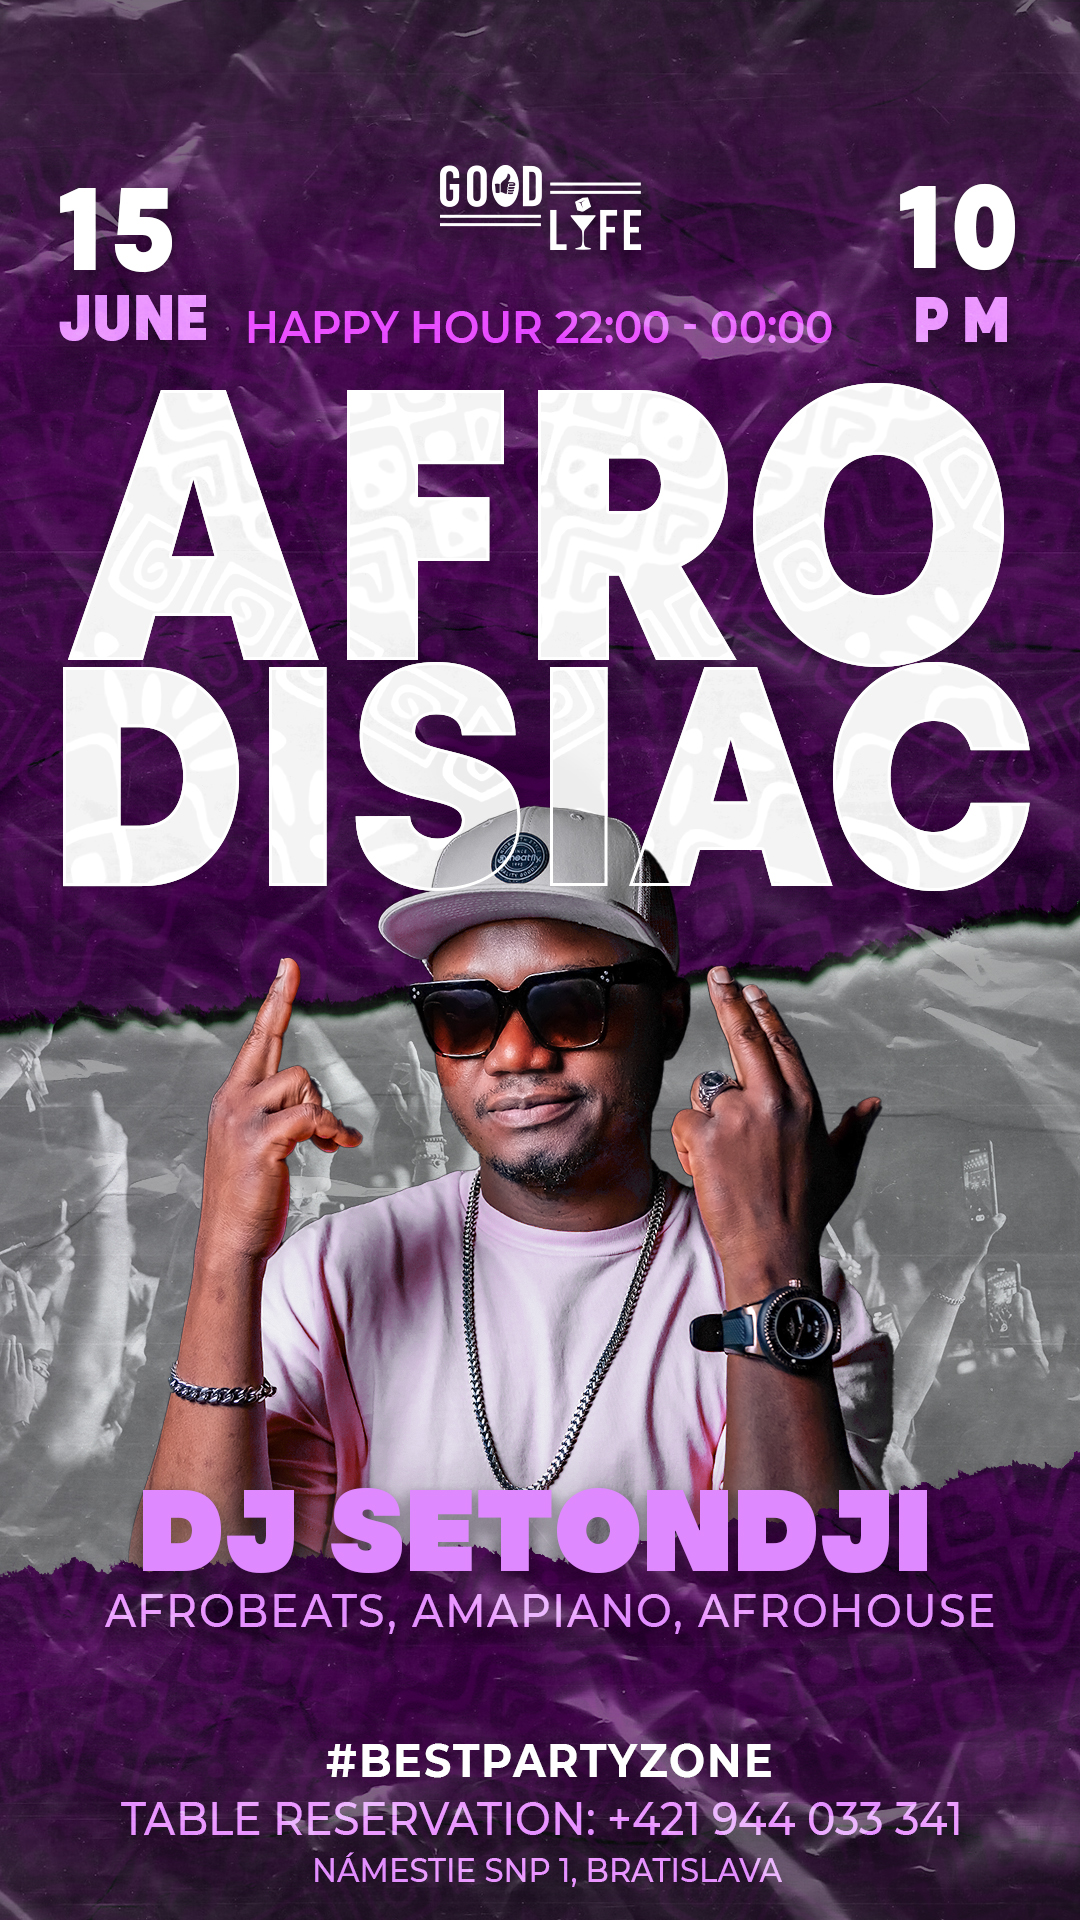 15.06 Afrodisiac @DJSetondji